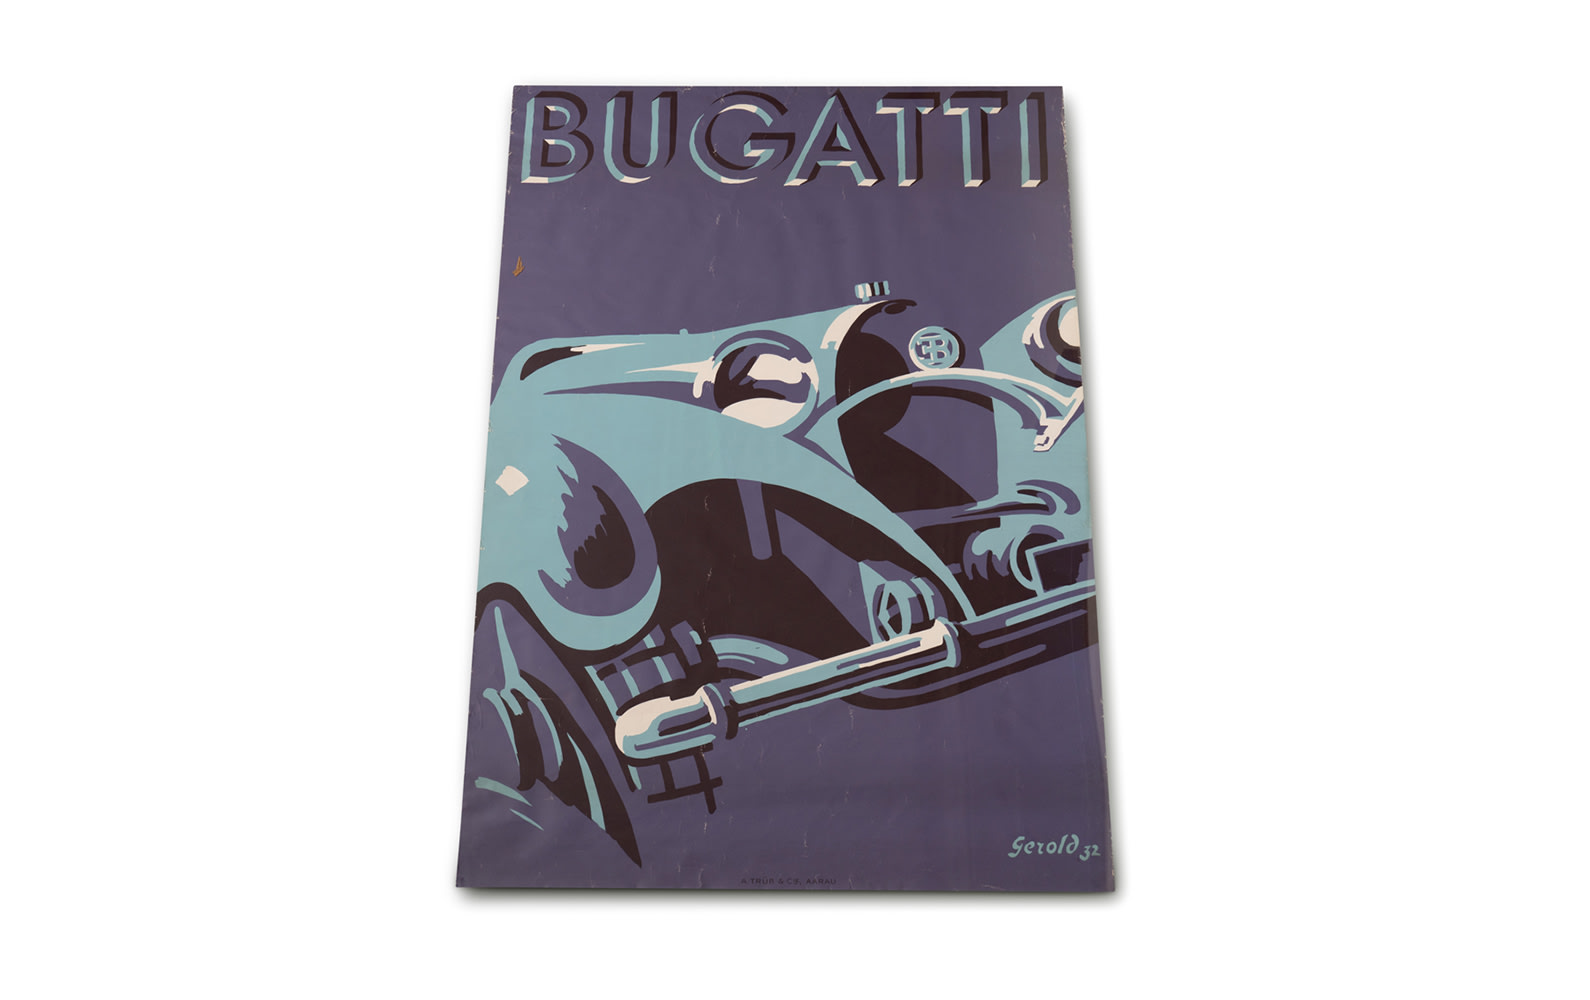 Bugatti Poster by Gerold, 1932 (Reprint)